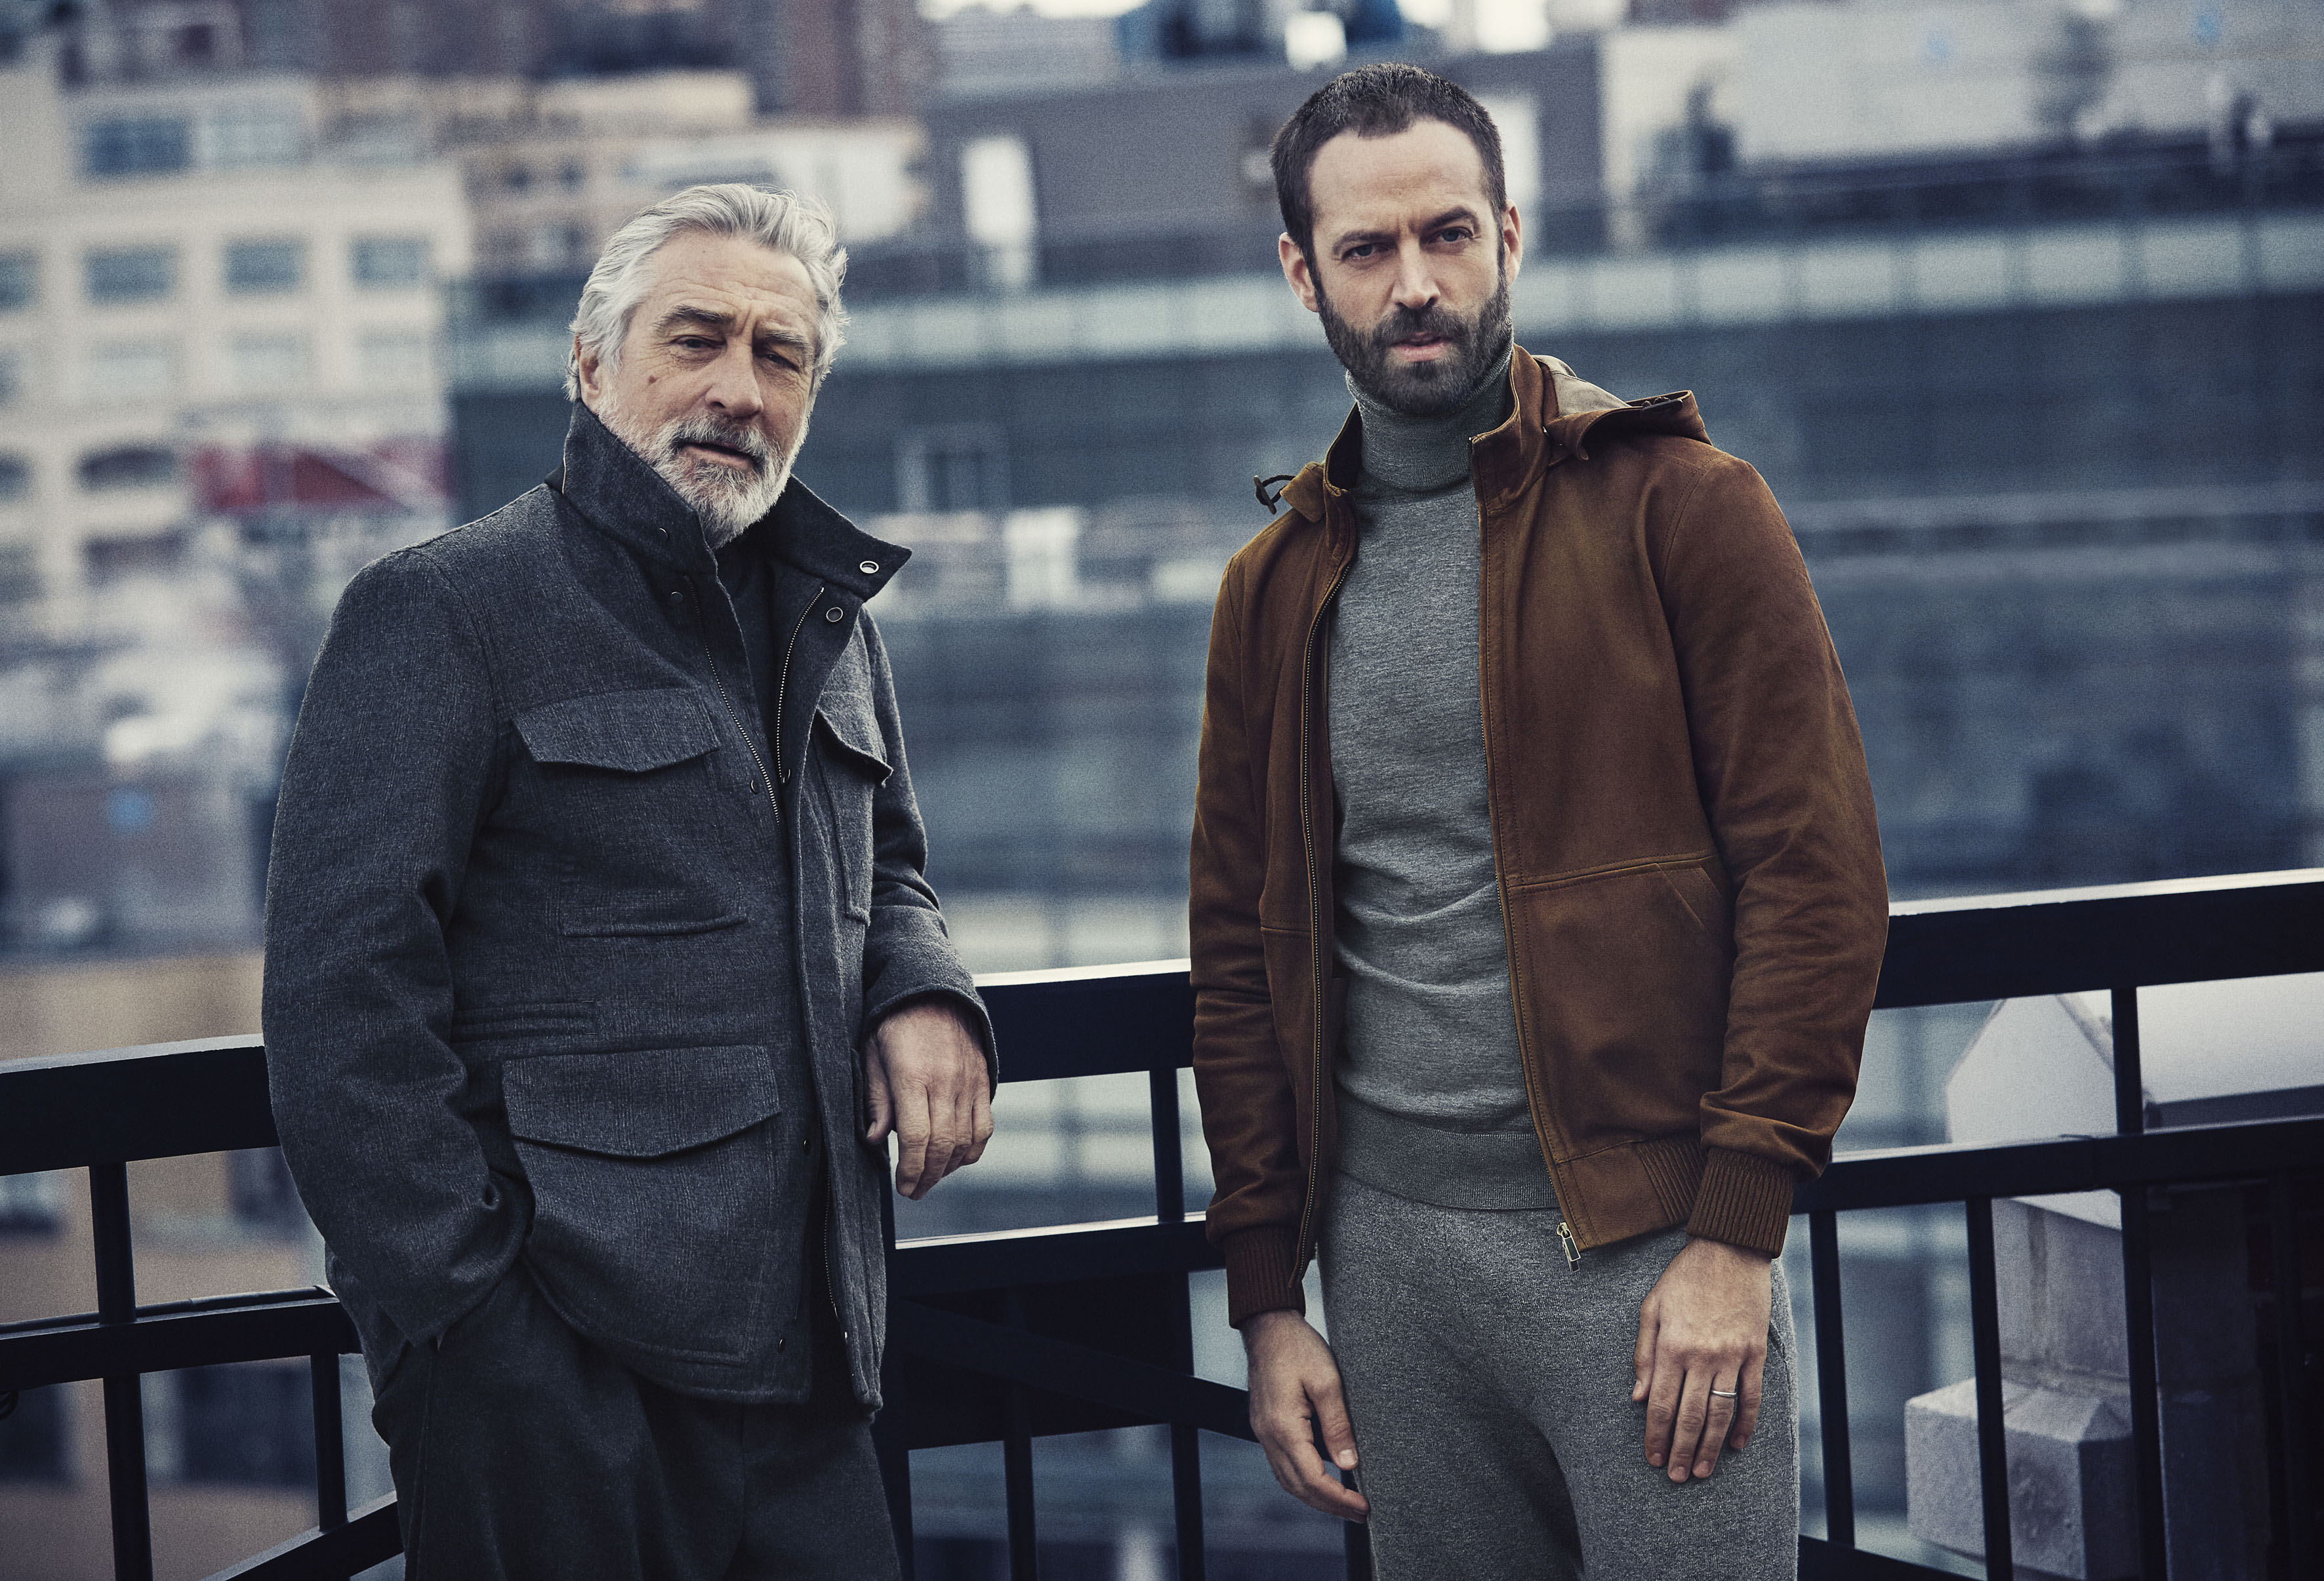 Robert De Niro and Benjamin Millepied on their defining moments in Ermenegildo Zegna’s campaign